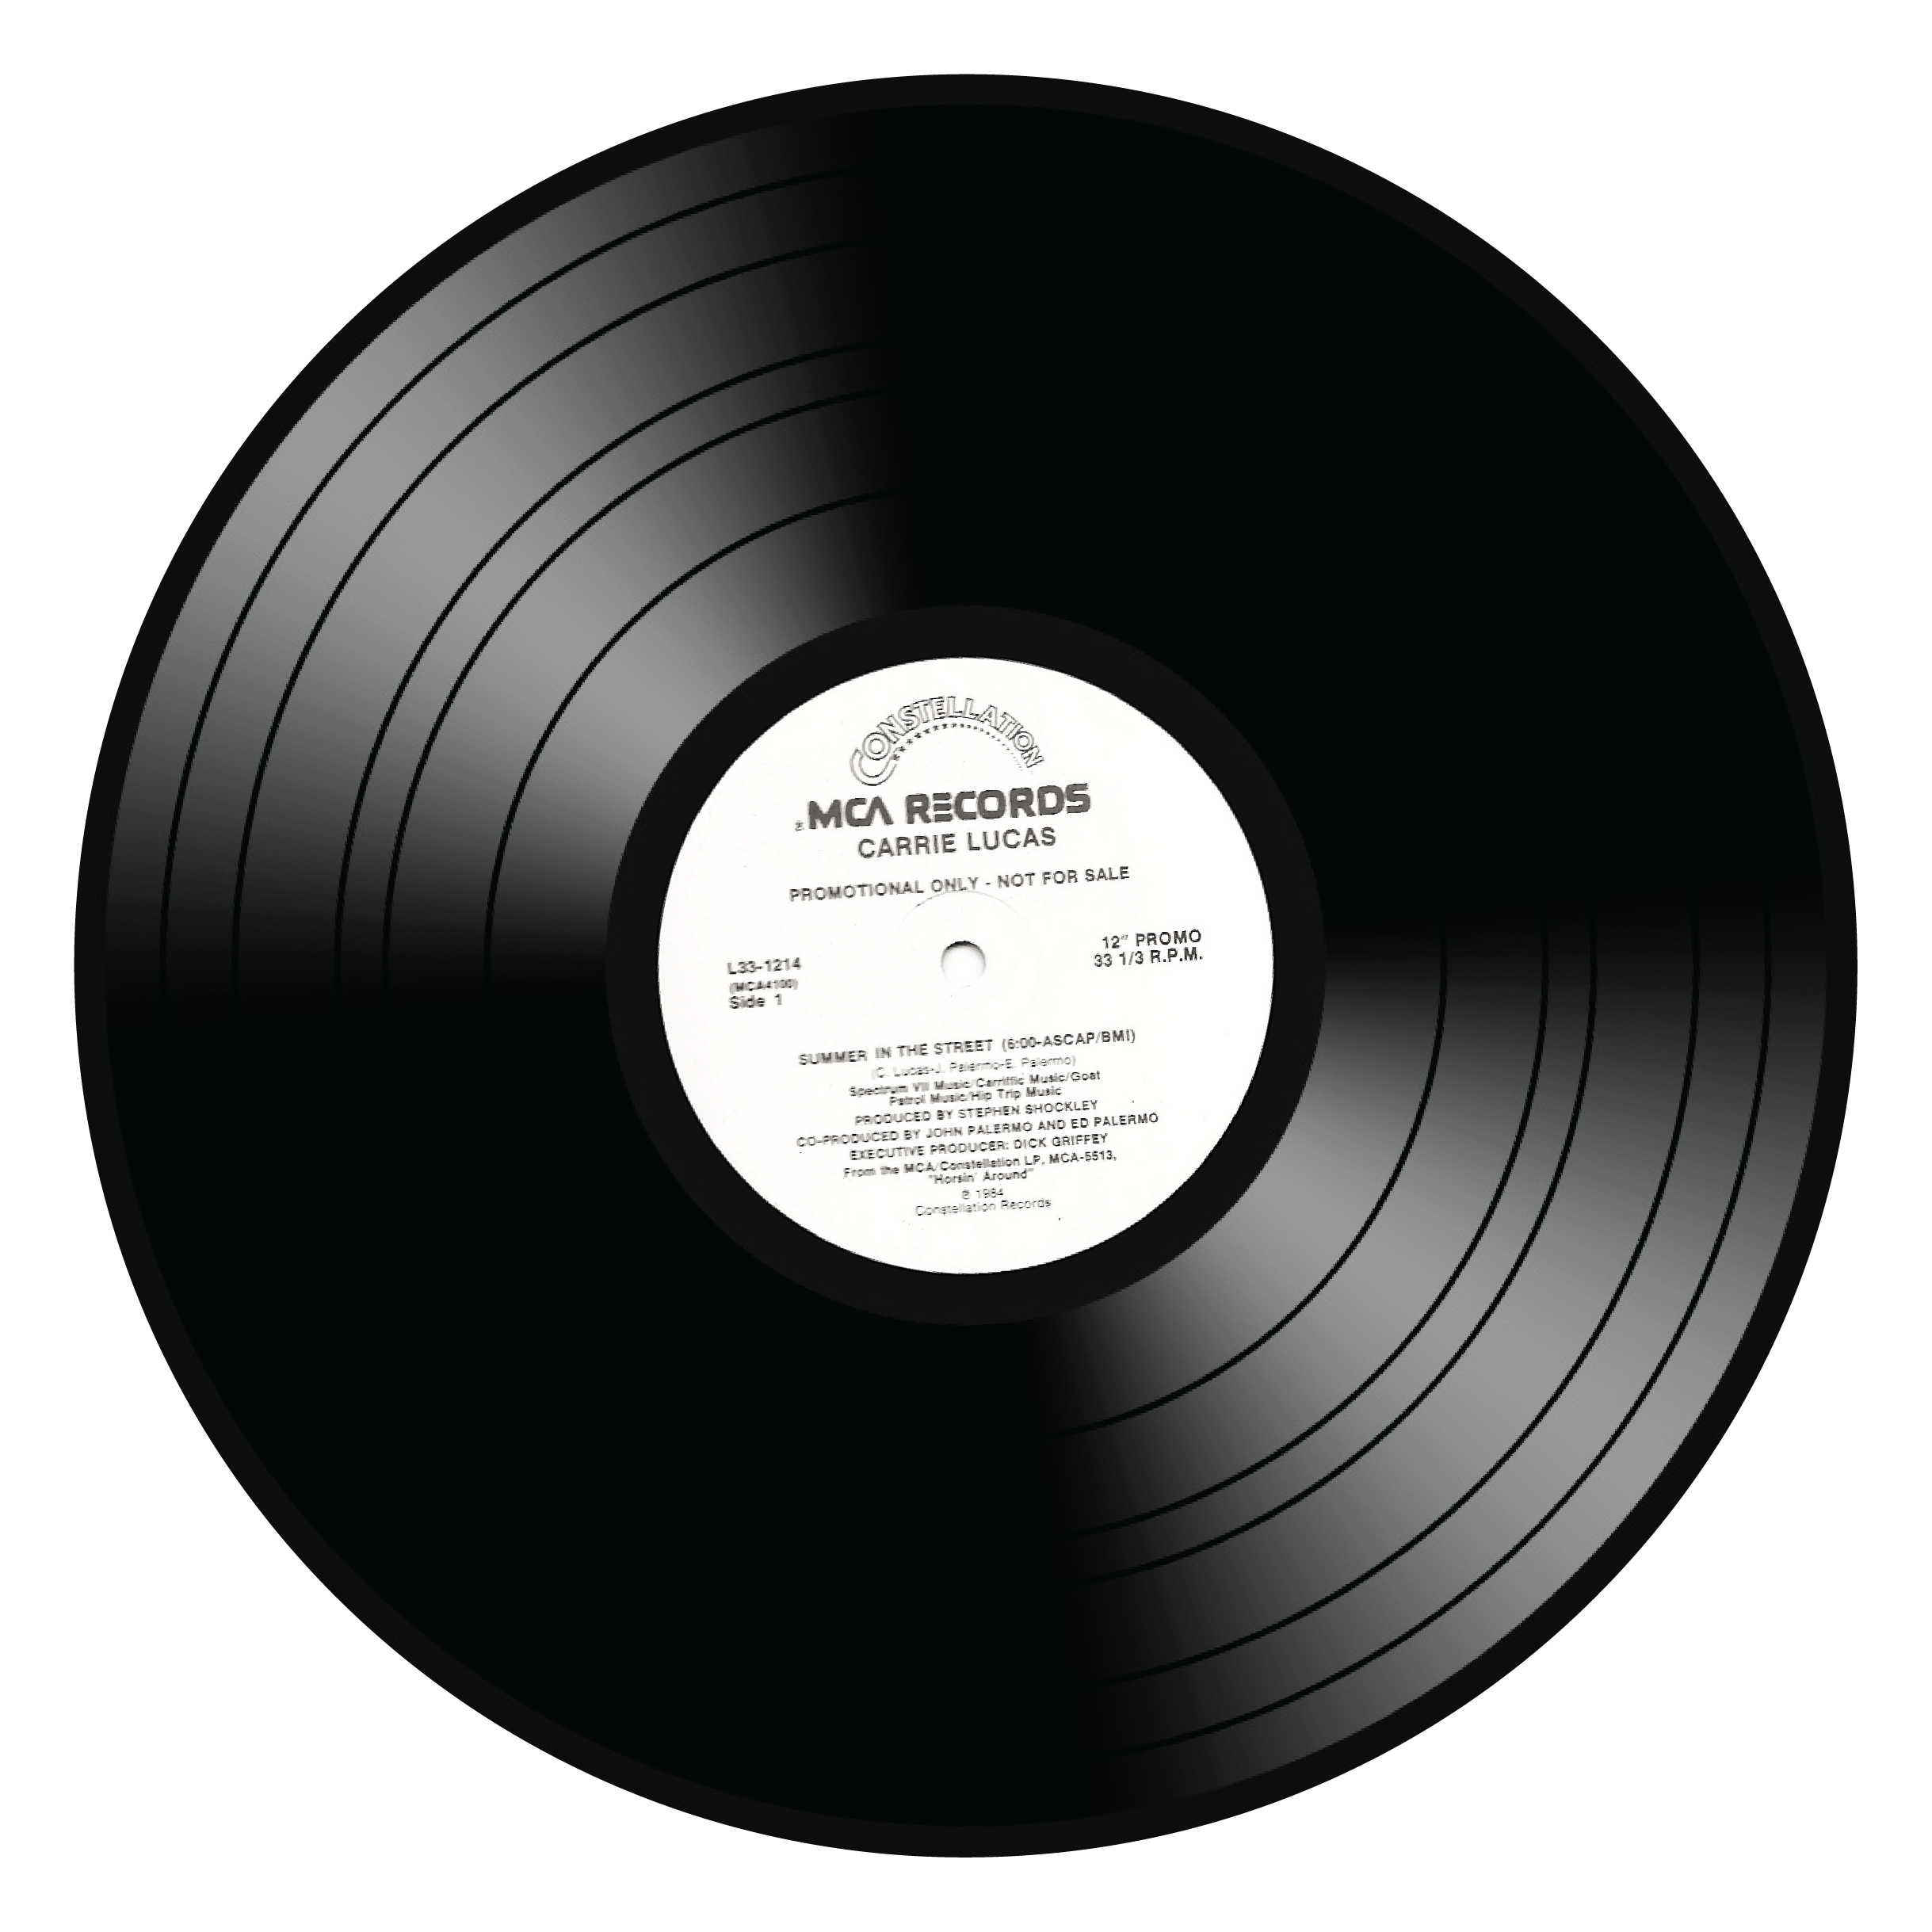 Vinyl clipart - Clipground